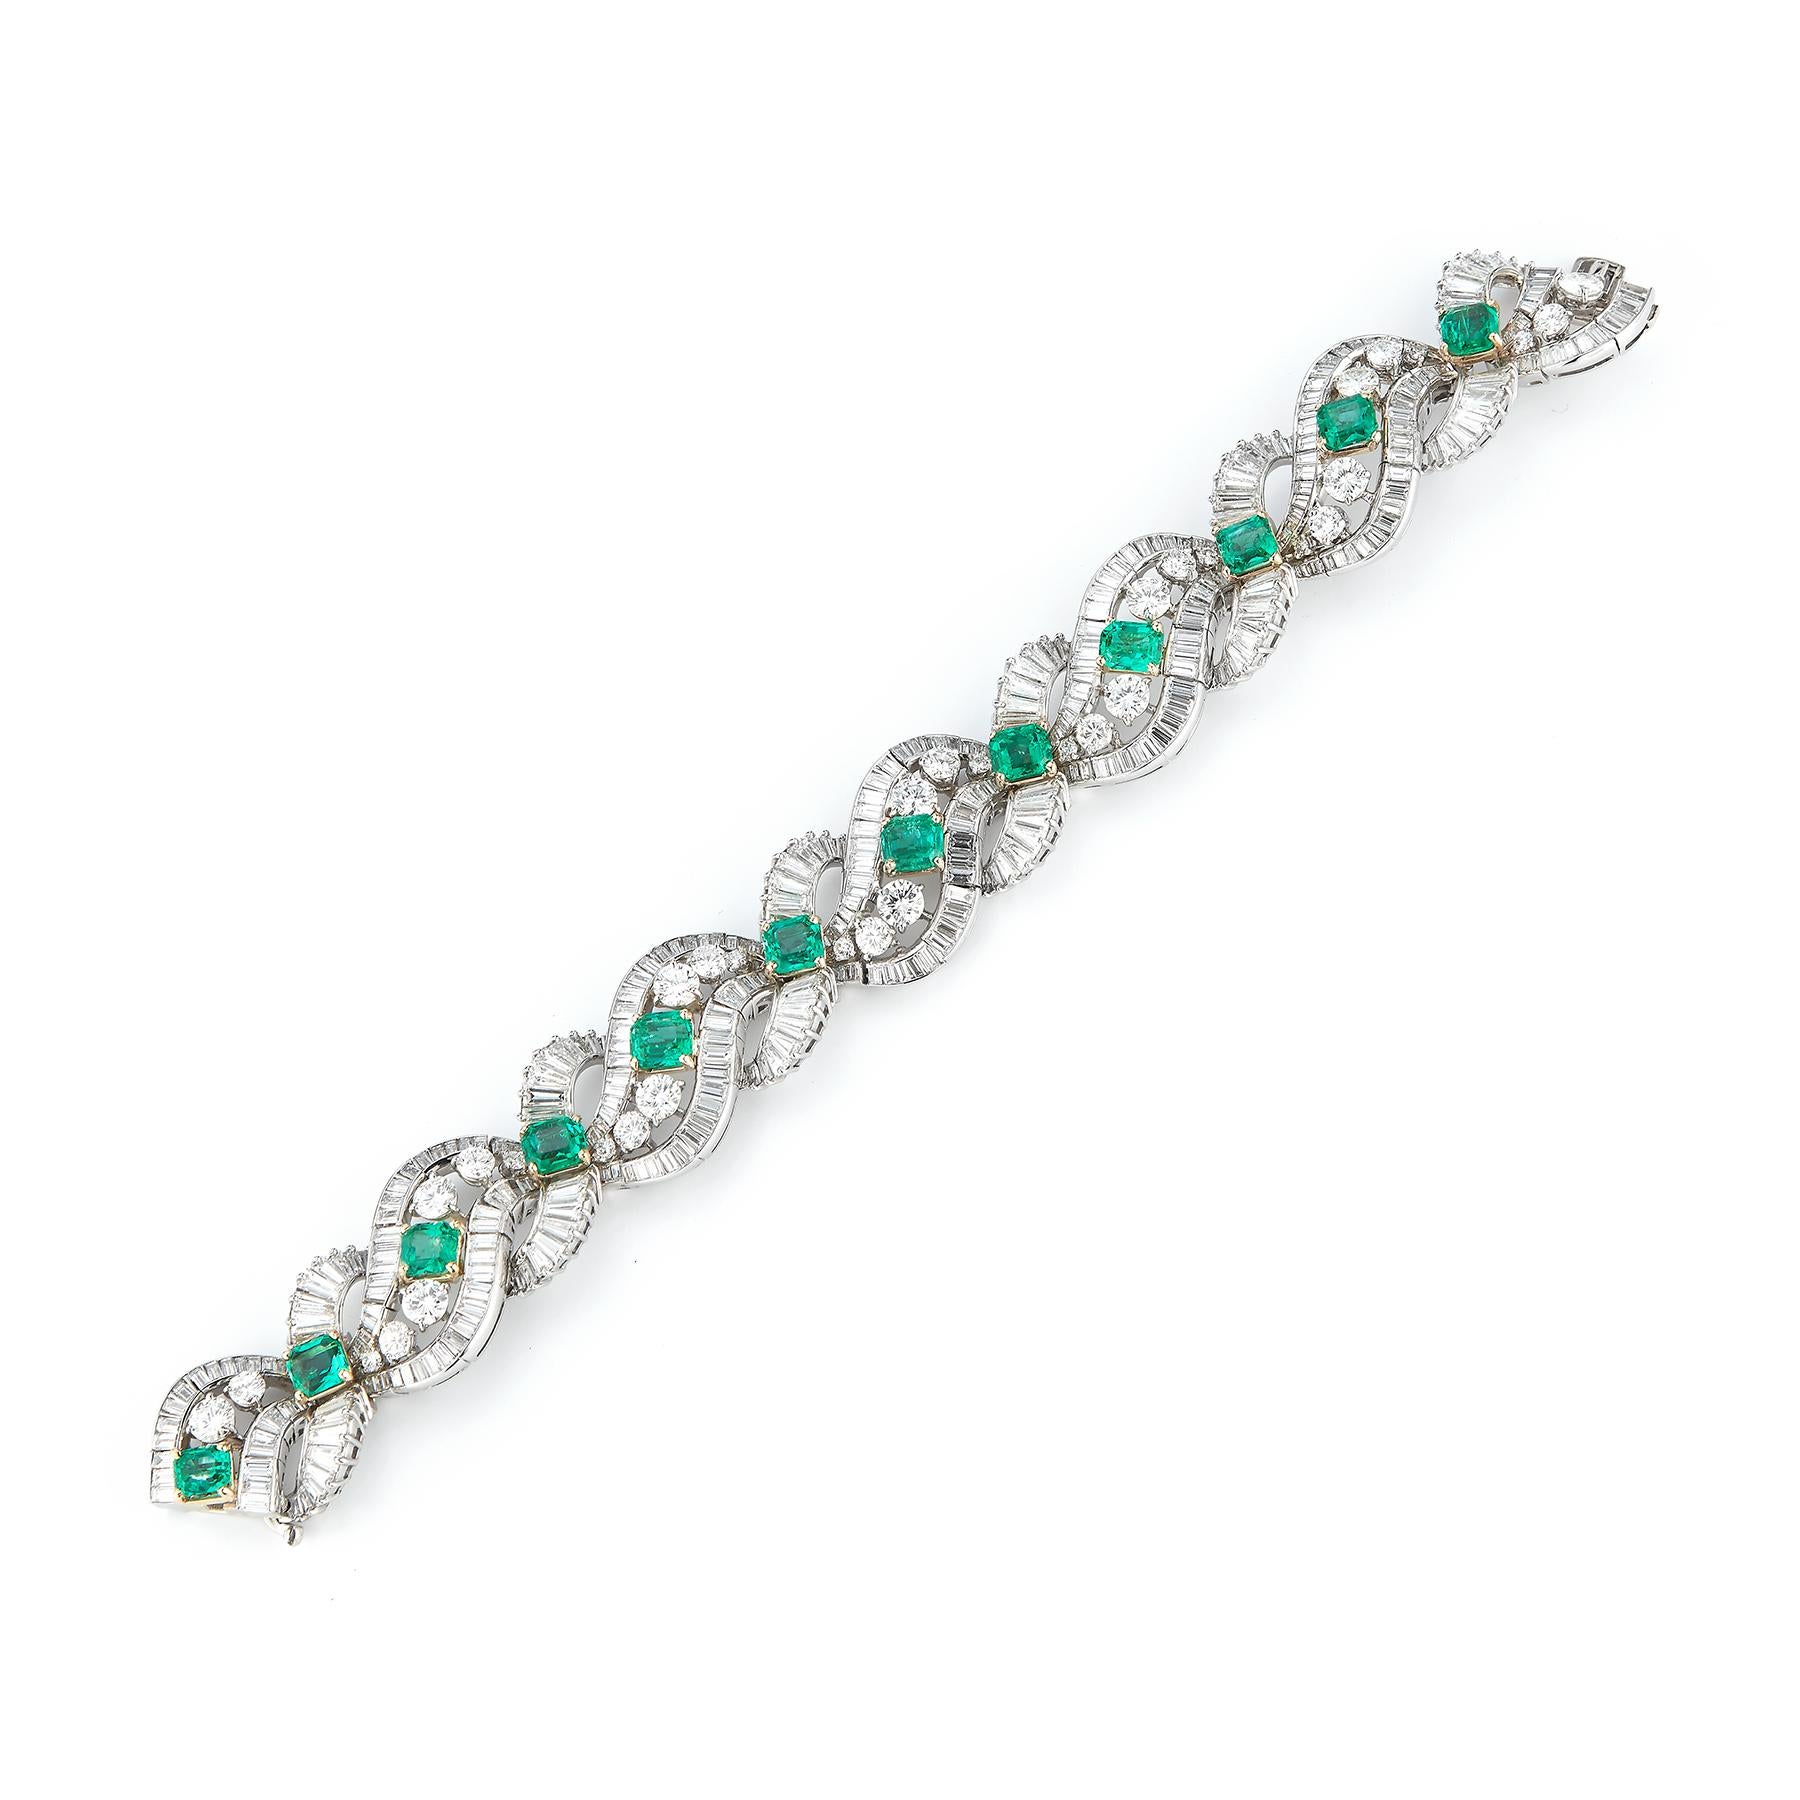 Bulgari Smaragd & Diamant-Armband, 12 Smaragde im Smaragdschliff ca. 8,00 ct  umgeben von  372 Baguette-Diamanten 72 Diamanten im Rundschliff, ca. 35,00 ct, gefasst in  weißes Gold 

Abmessungen: 7,5